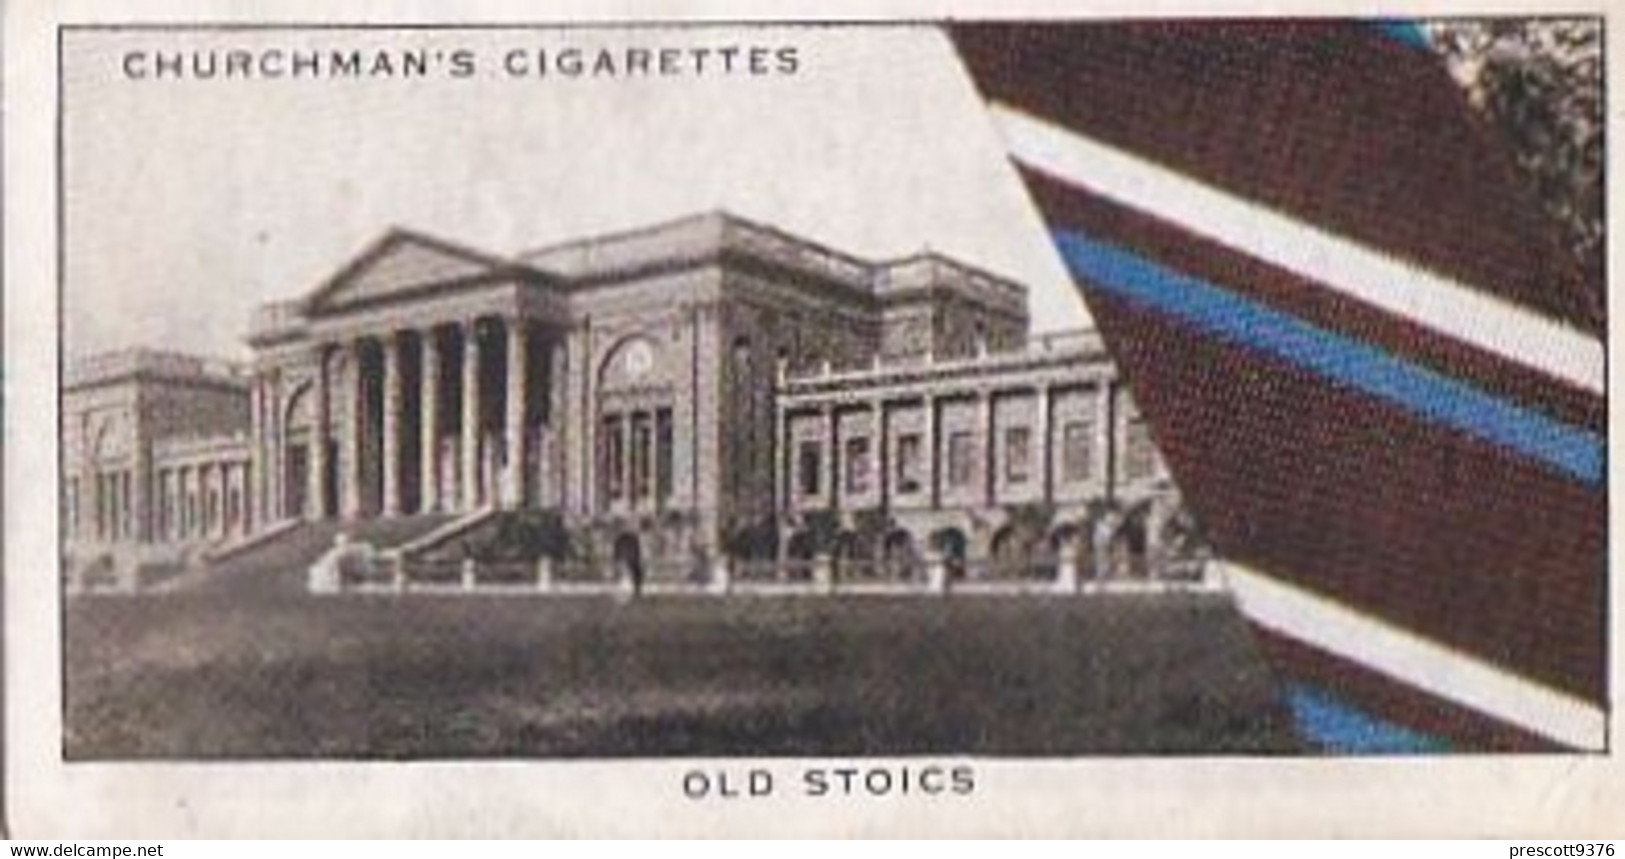 Well Known Ties 2nd 1935 - 48 Old Stoics - Churchman Cigarette Card - Original - - Churchman